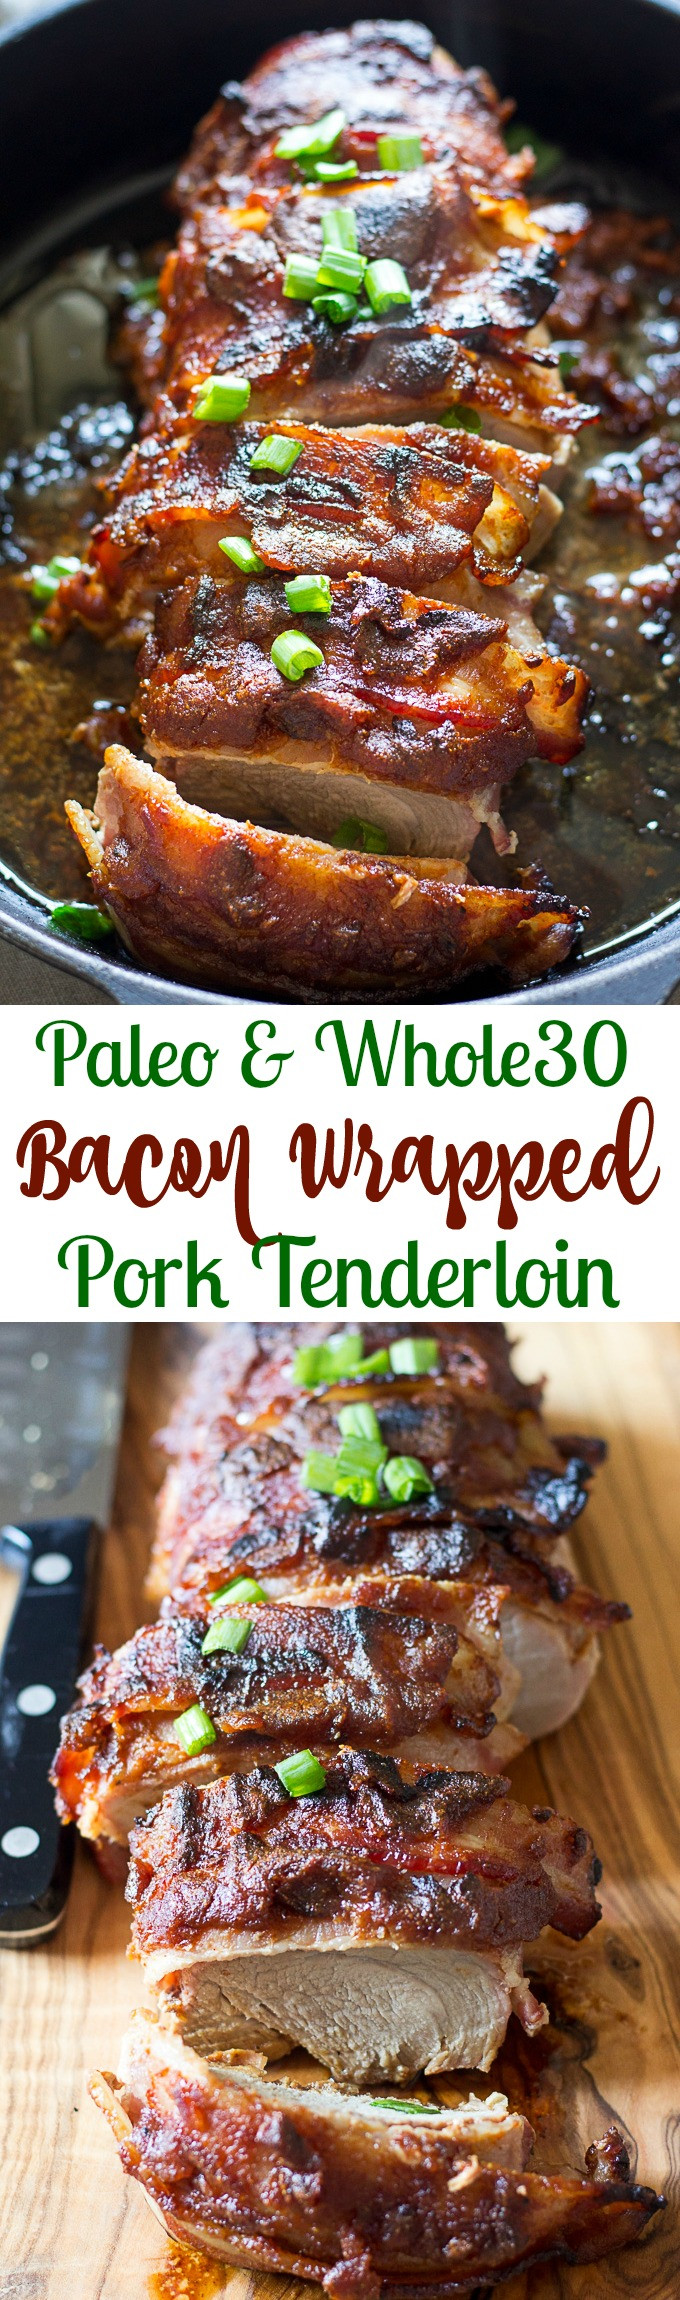 Paleo Pork Tenderloin
 Paleo and Whole30 Bacon Wrapped Pork Tenderloin